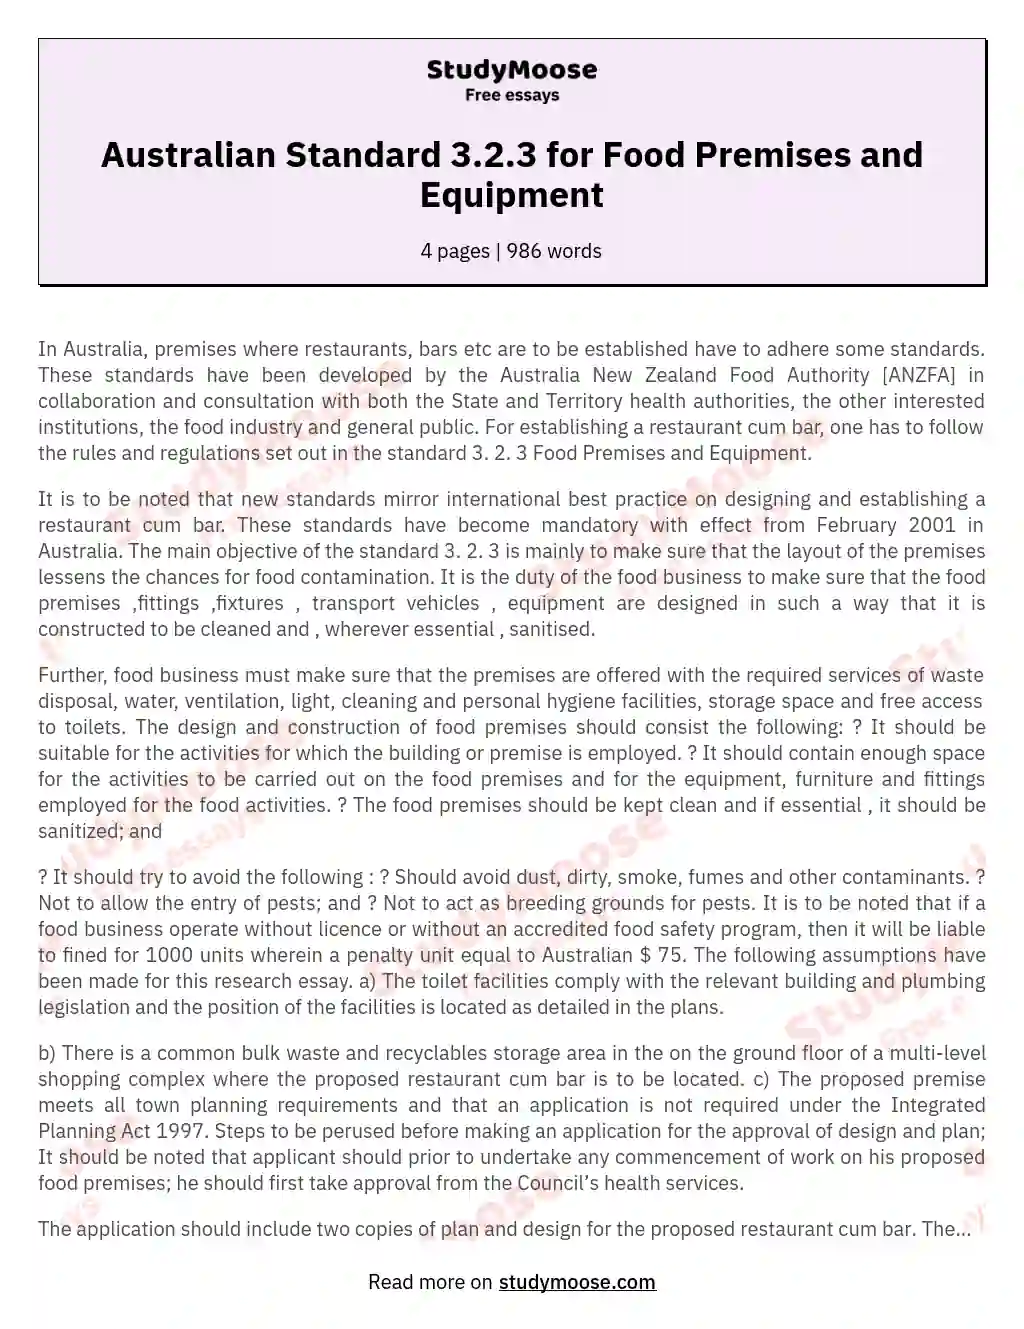 Australian Standard 3.2.3 for Food Premises and Equipment essay